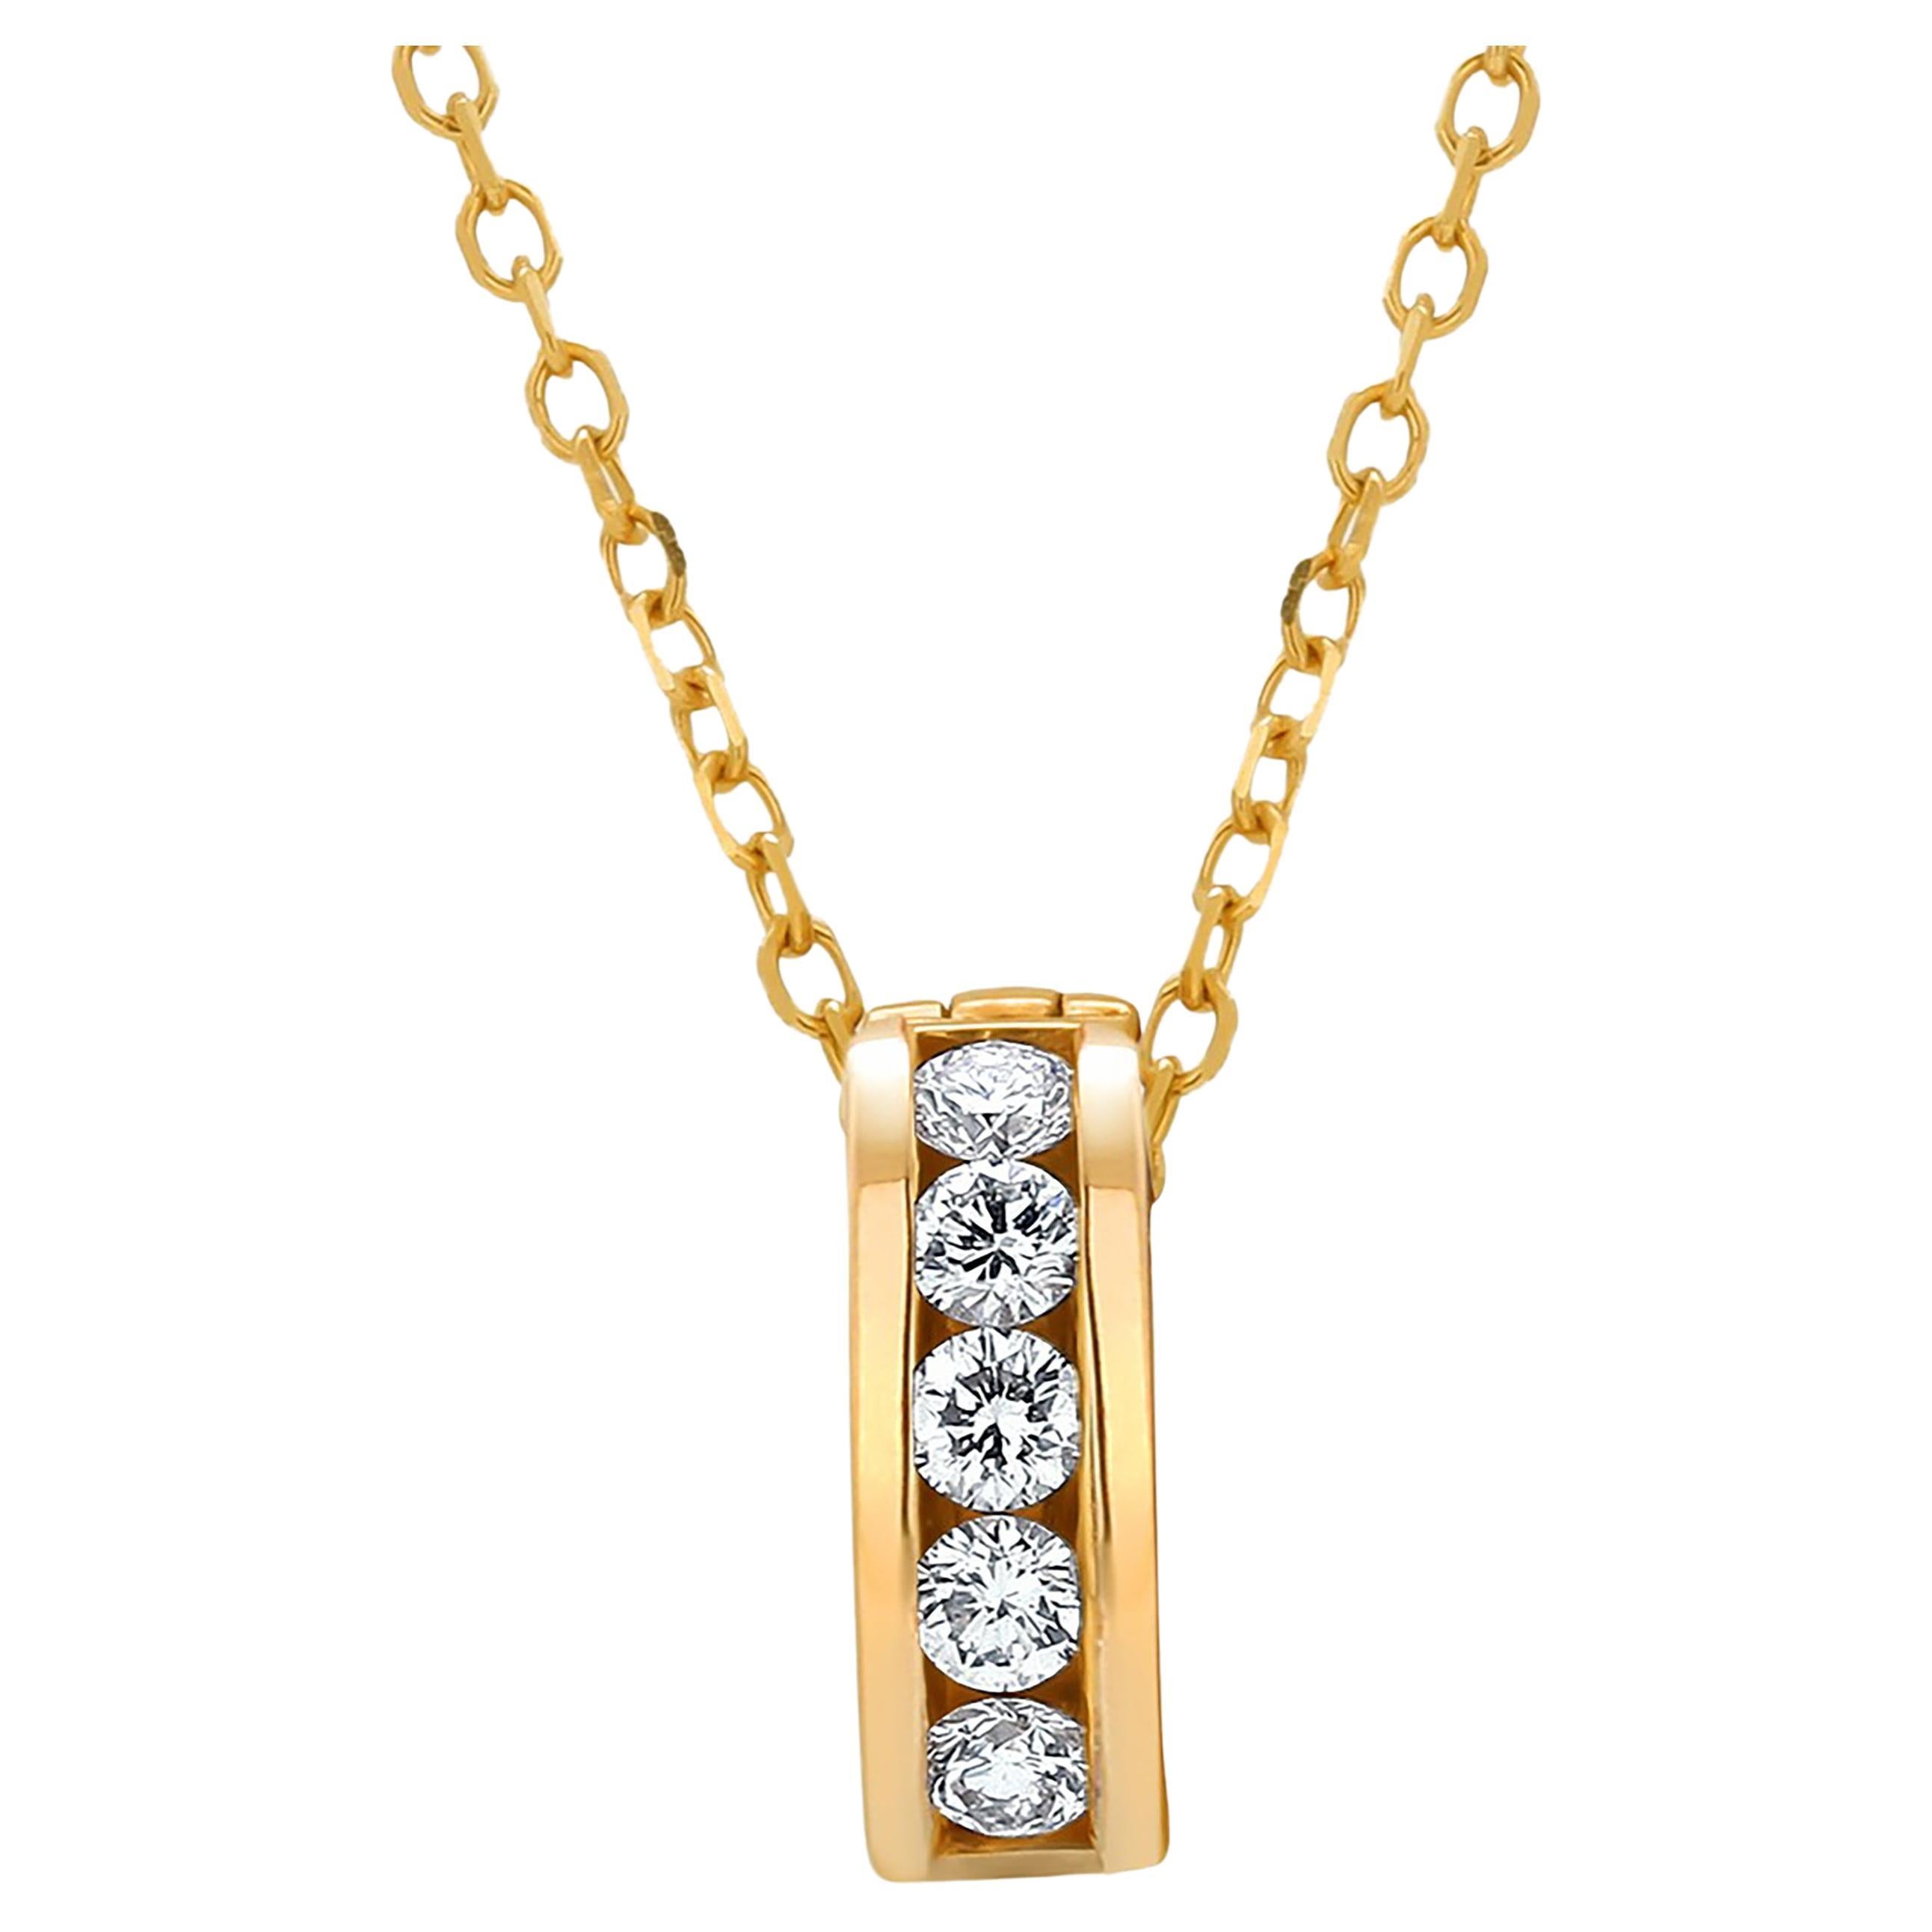 Round Diamond Detachable Charm Hanging on Yellow Gold Pendant Necklace